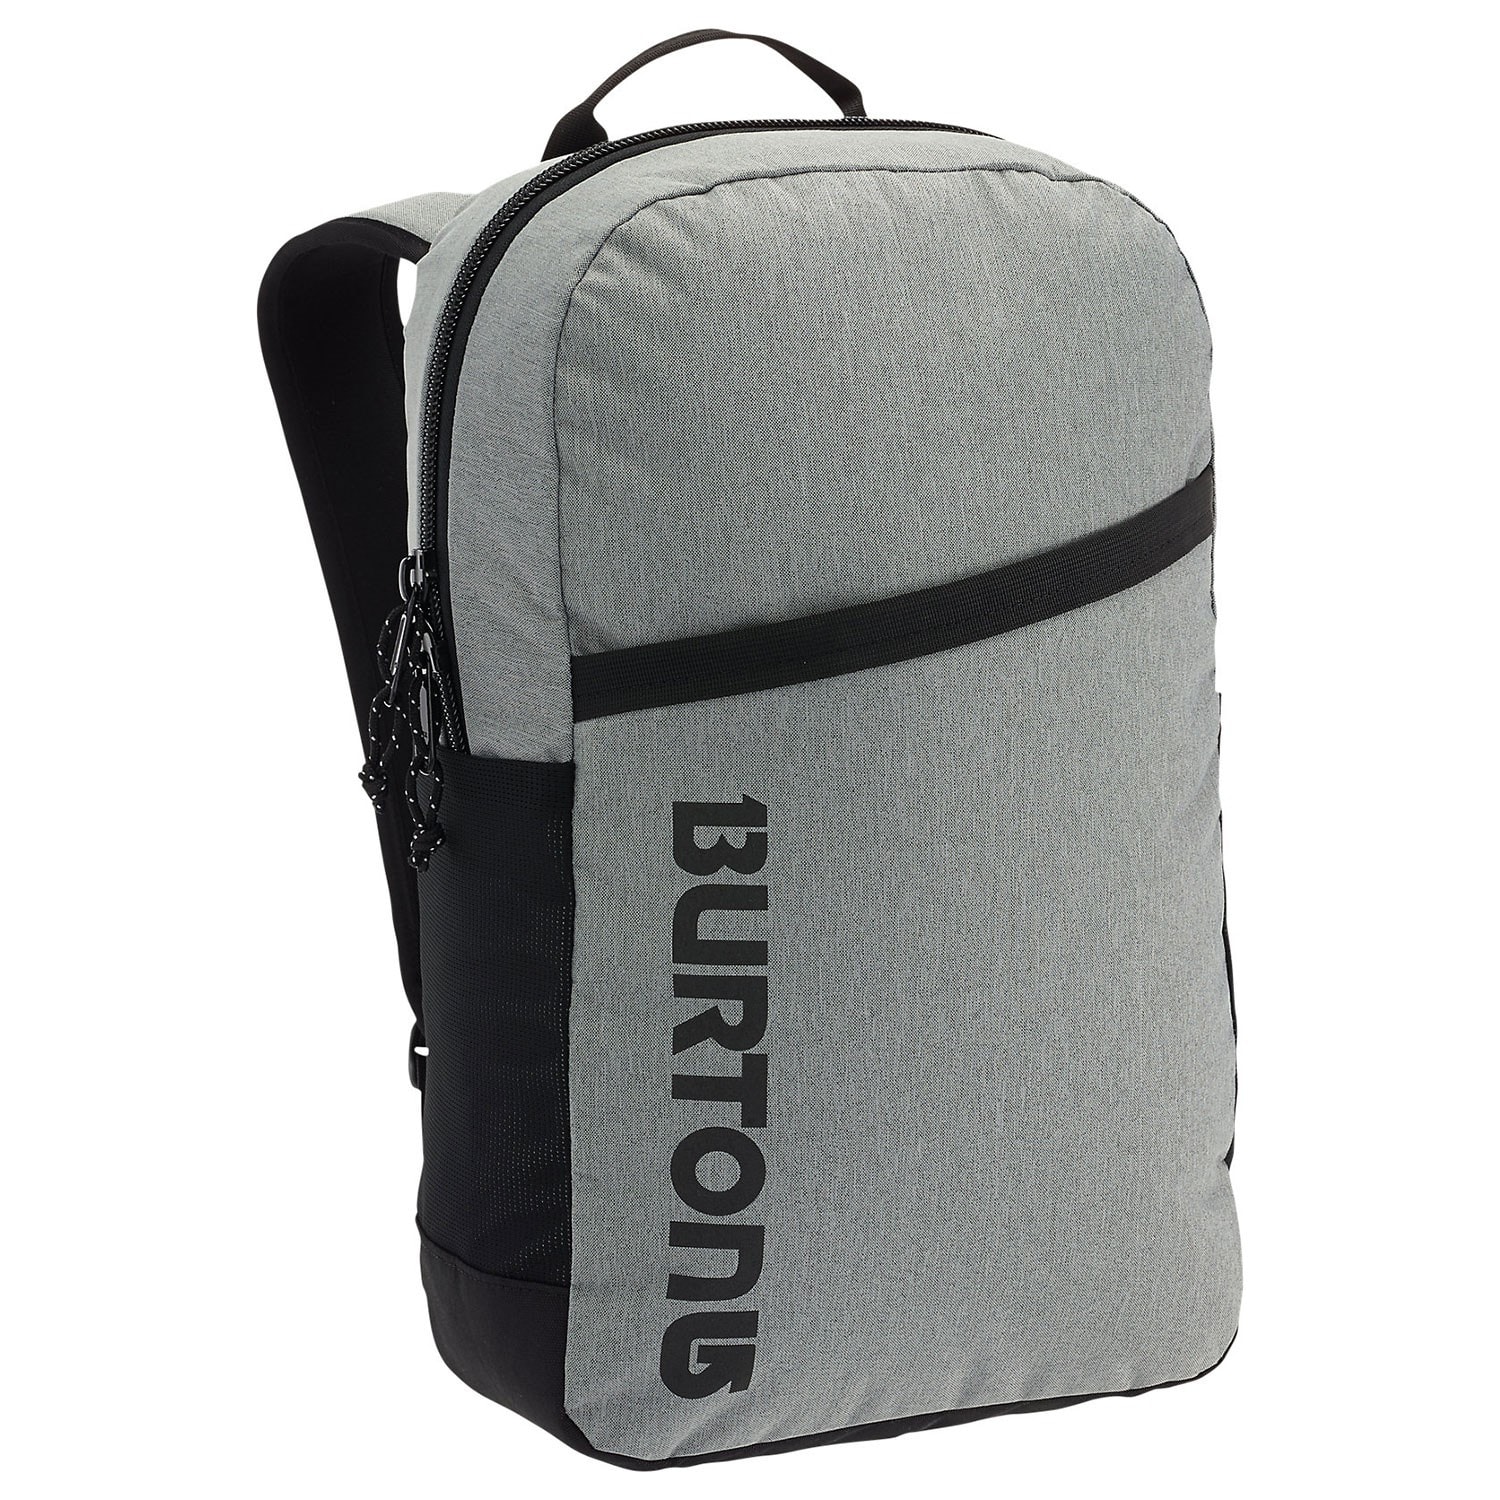 Backpack Burton Apollo grey heather